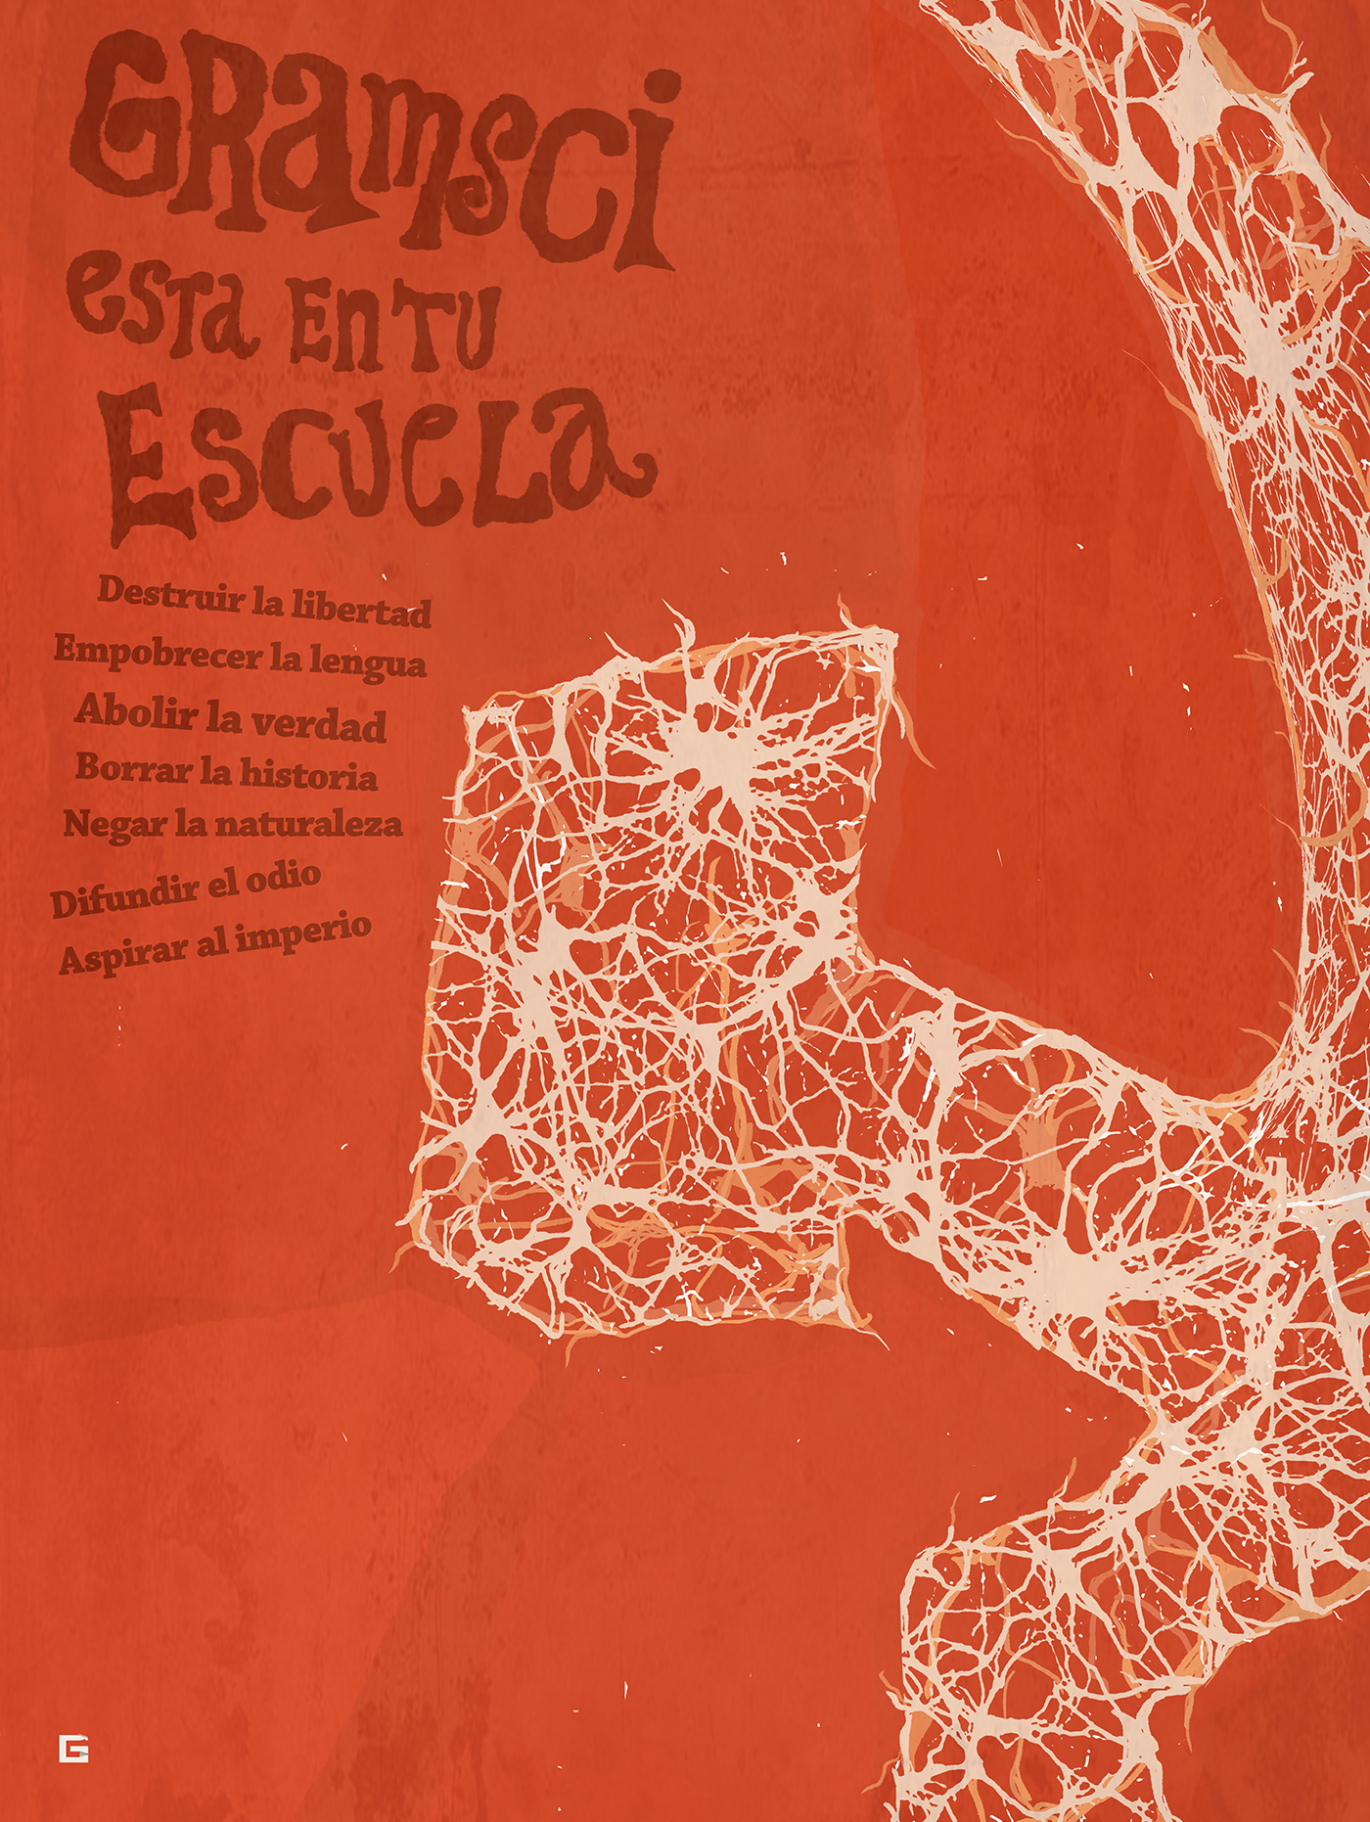 Gorki Aguila, Gramsci esta es tu escuela, 2020, digital print limited edition, 1:10